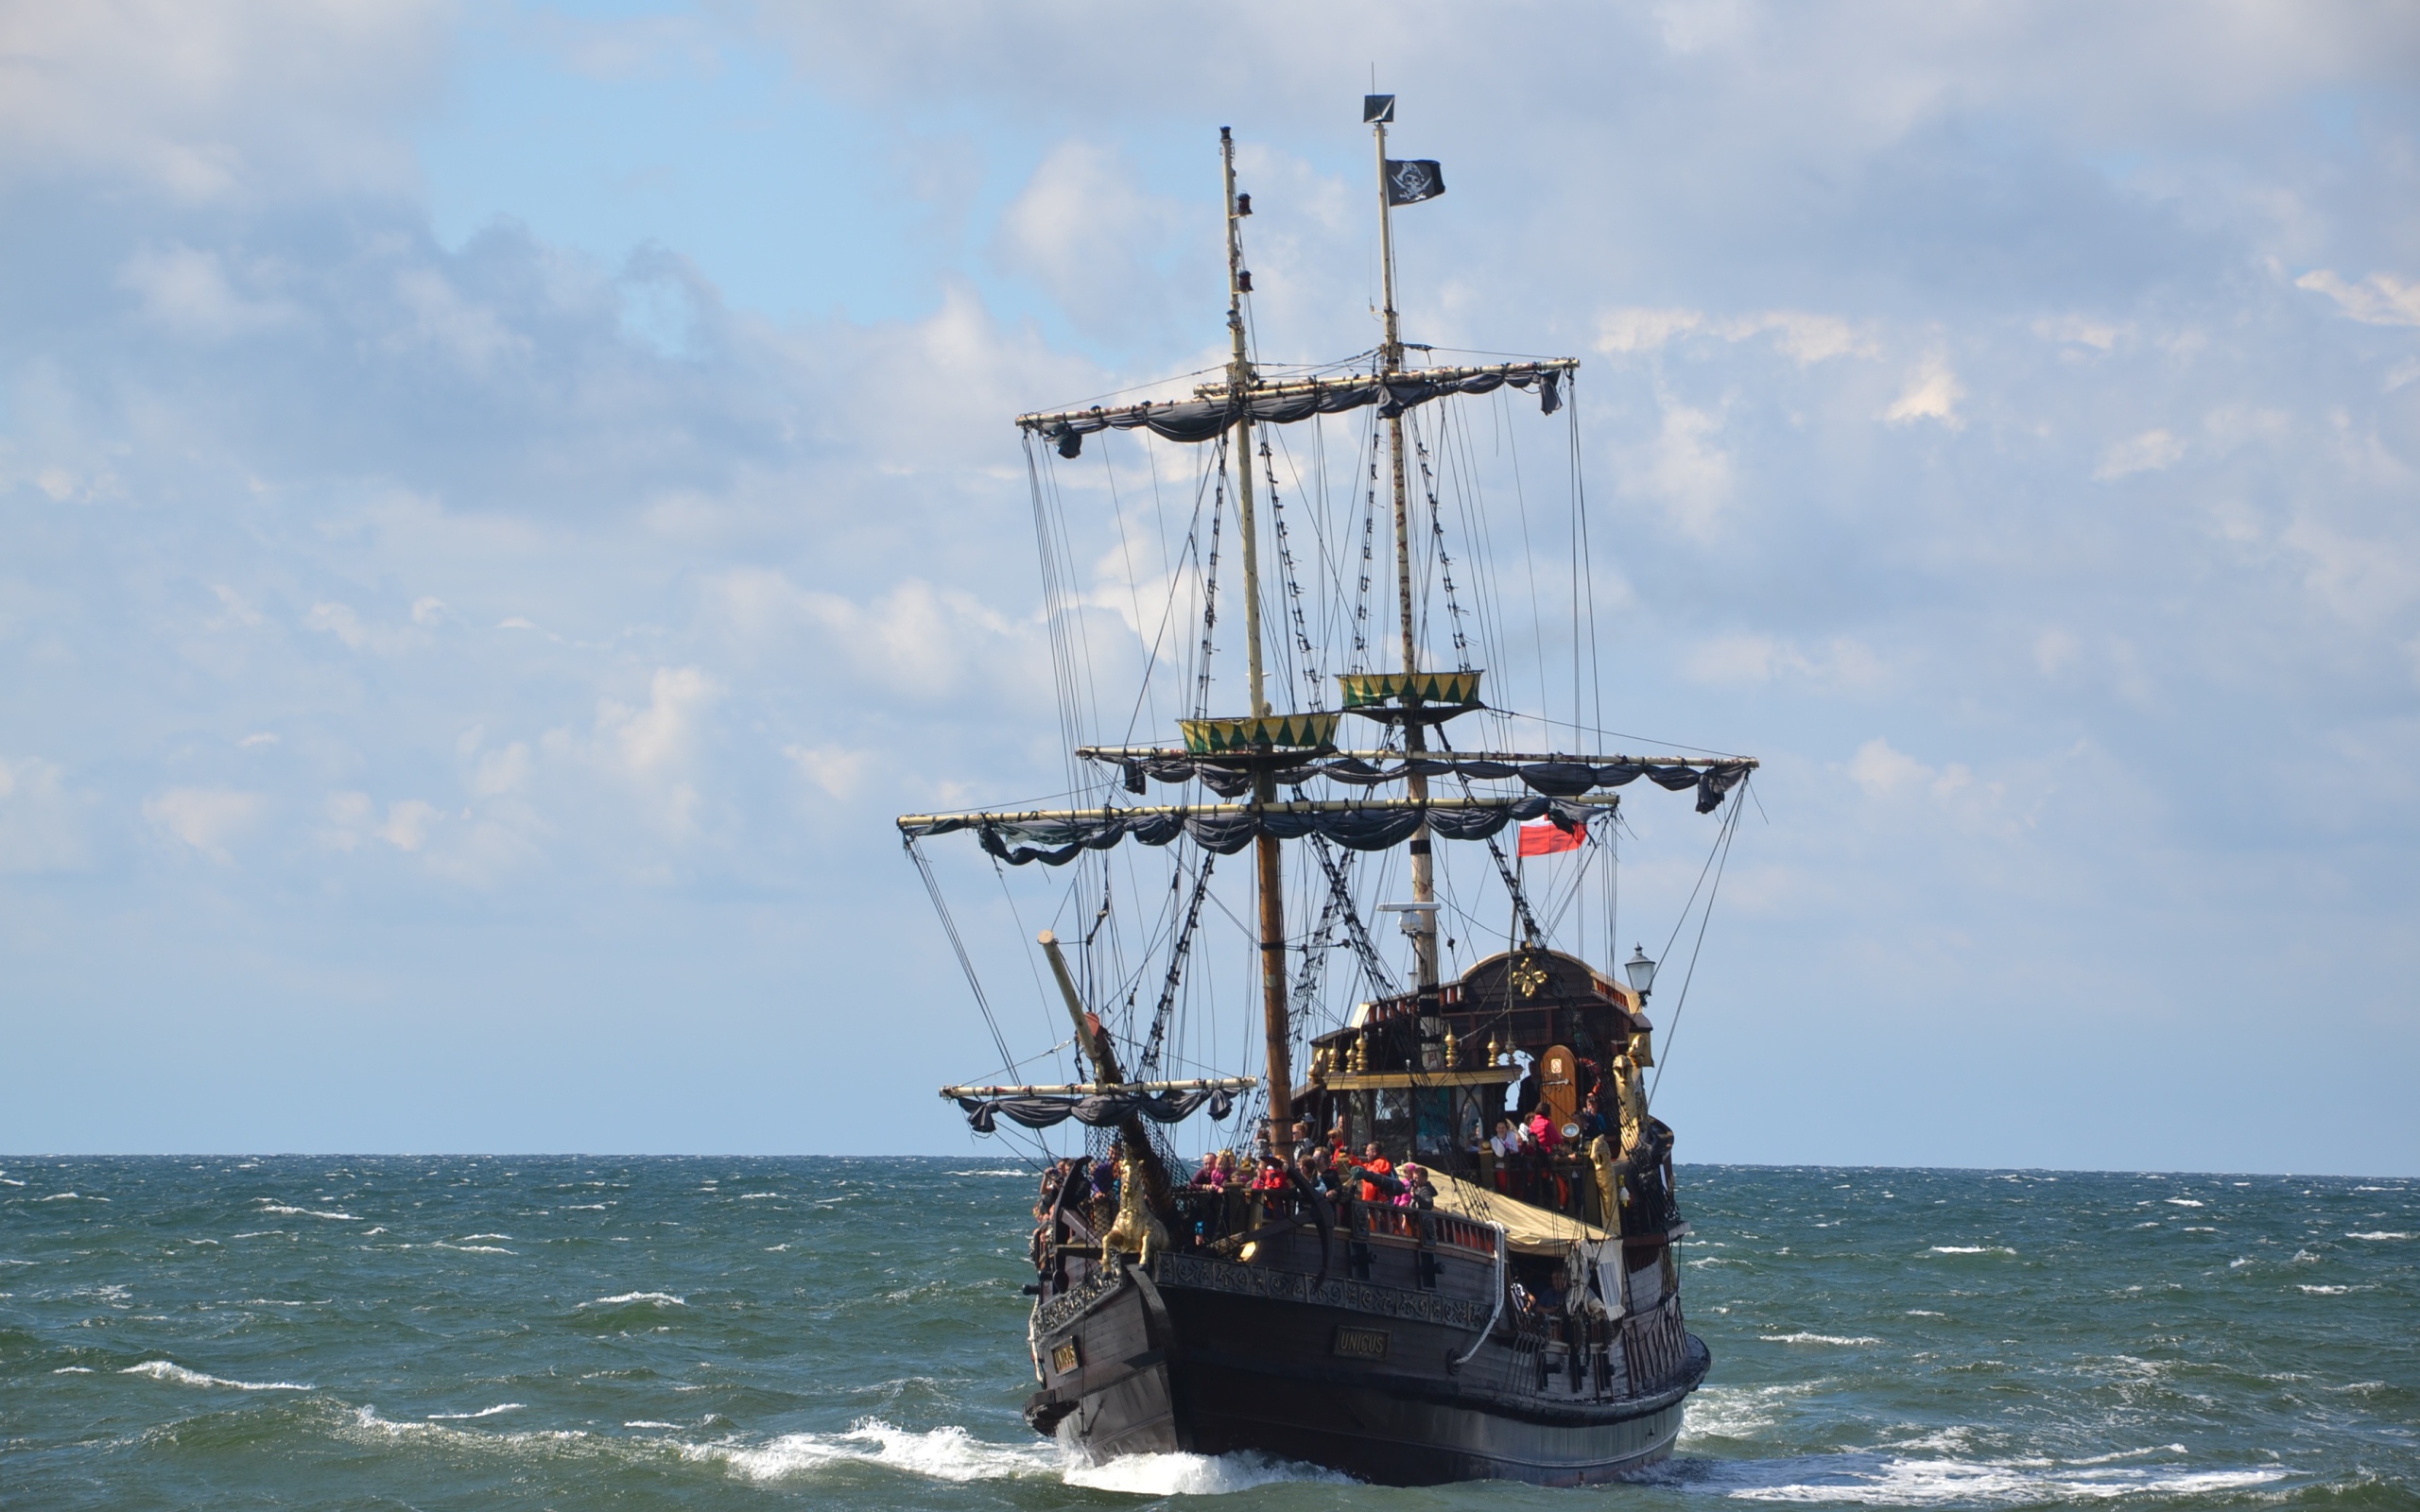 Big black pirate ship at sea